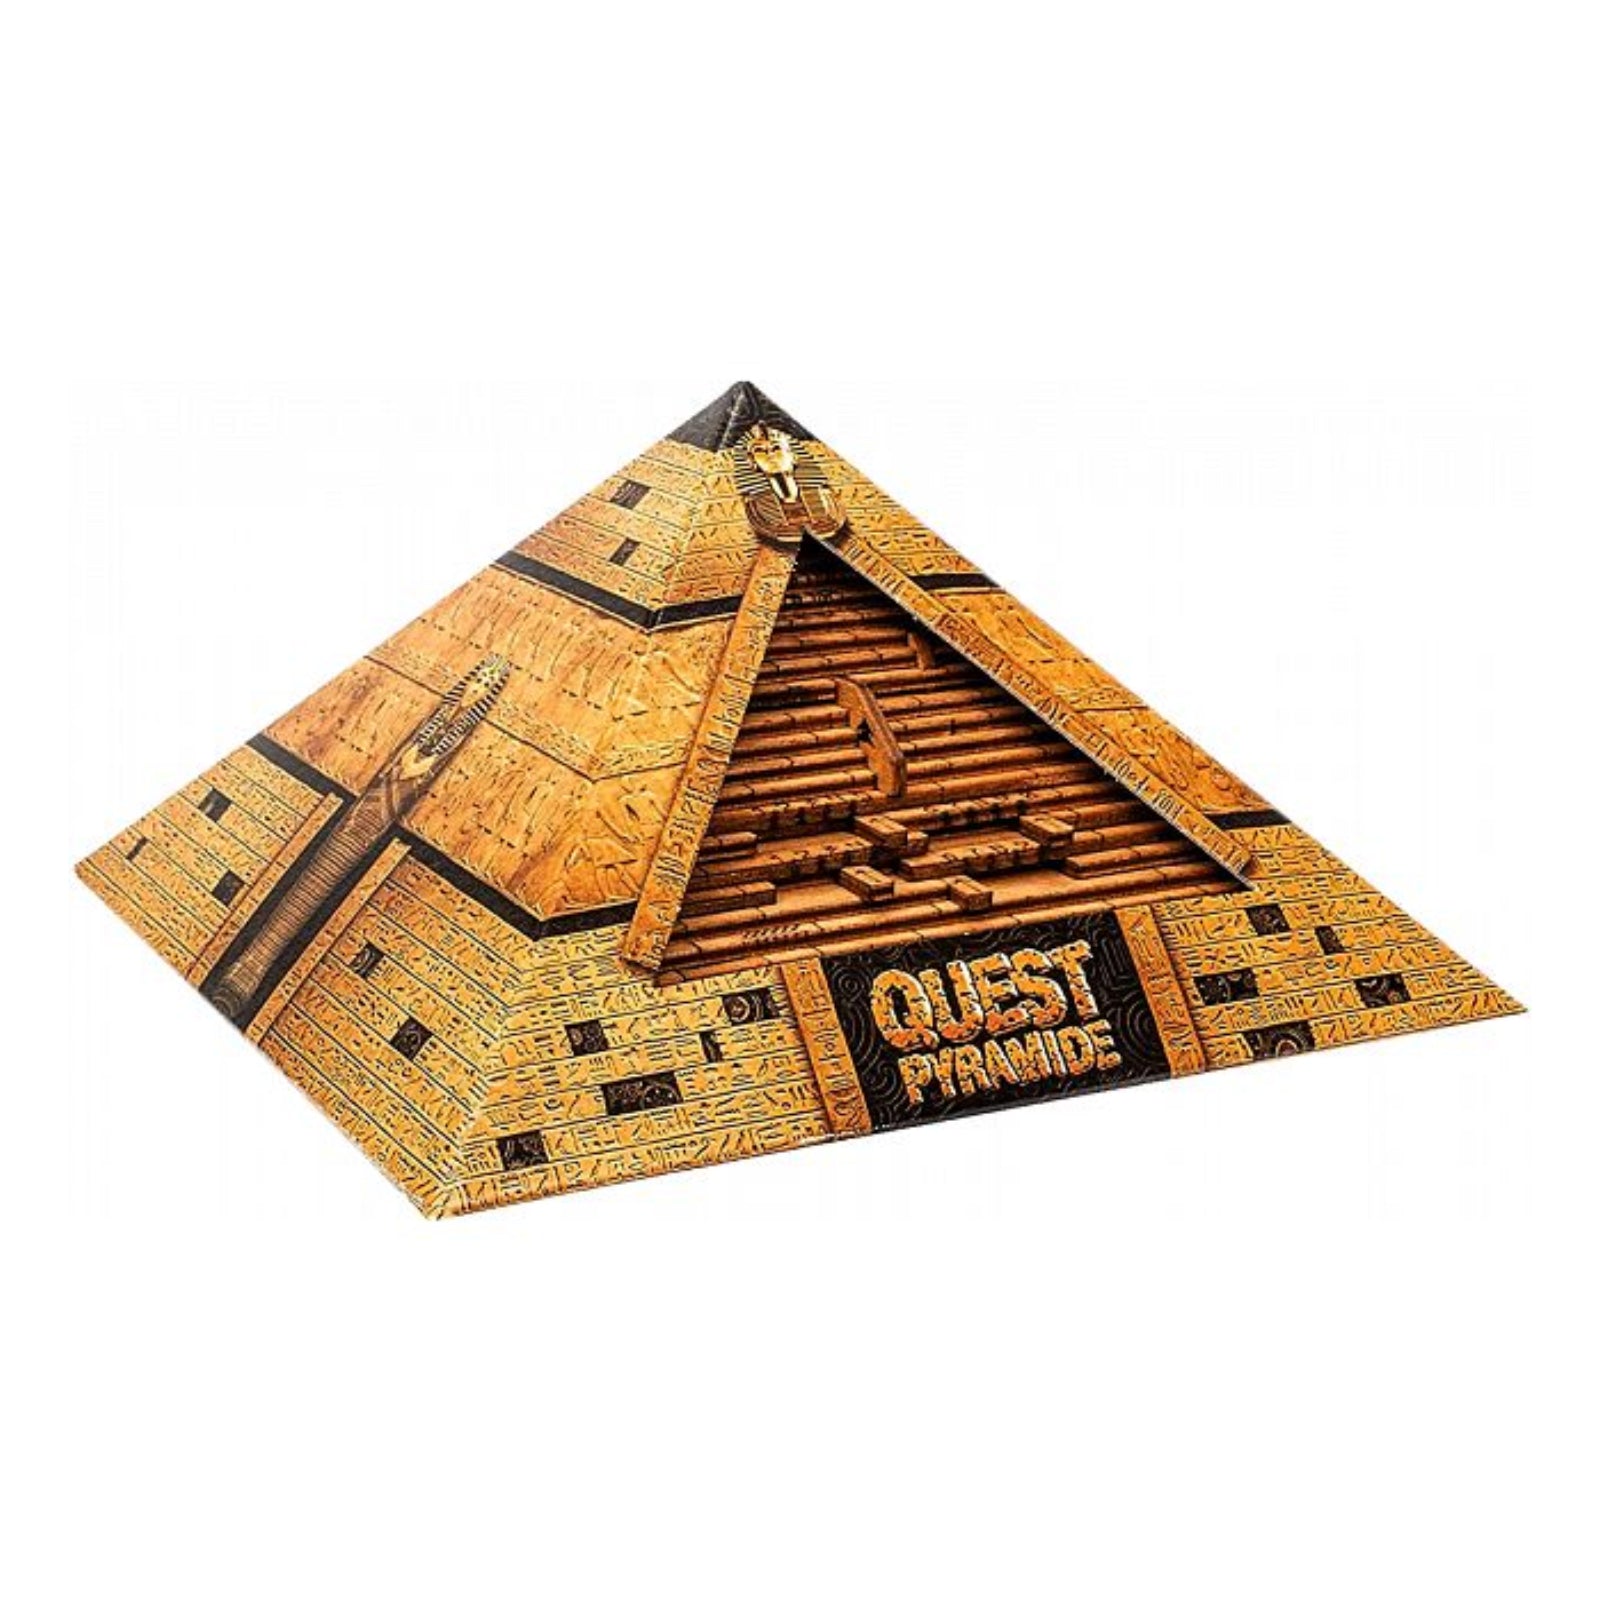 Quest Pyramid - Level 9 - ESC Welt